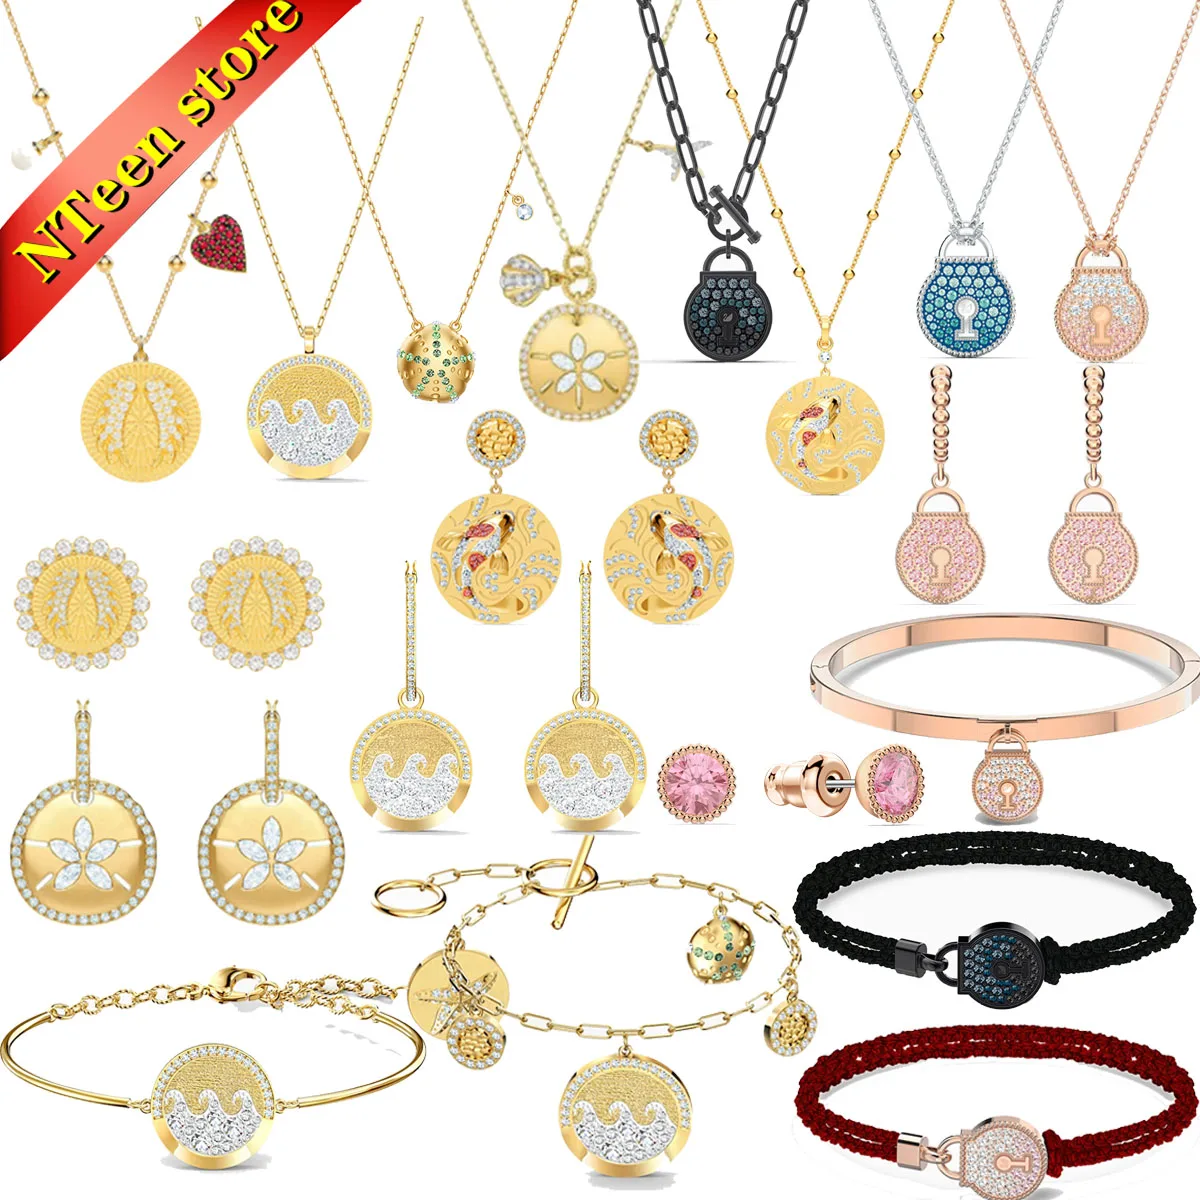 Swa Original Ladies Jewelry Sets Shine Wave Golden Wings Koi Jewelry Lock  Earrings Necklaces Bracelets Romantic Gift For Women